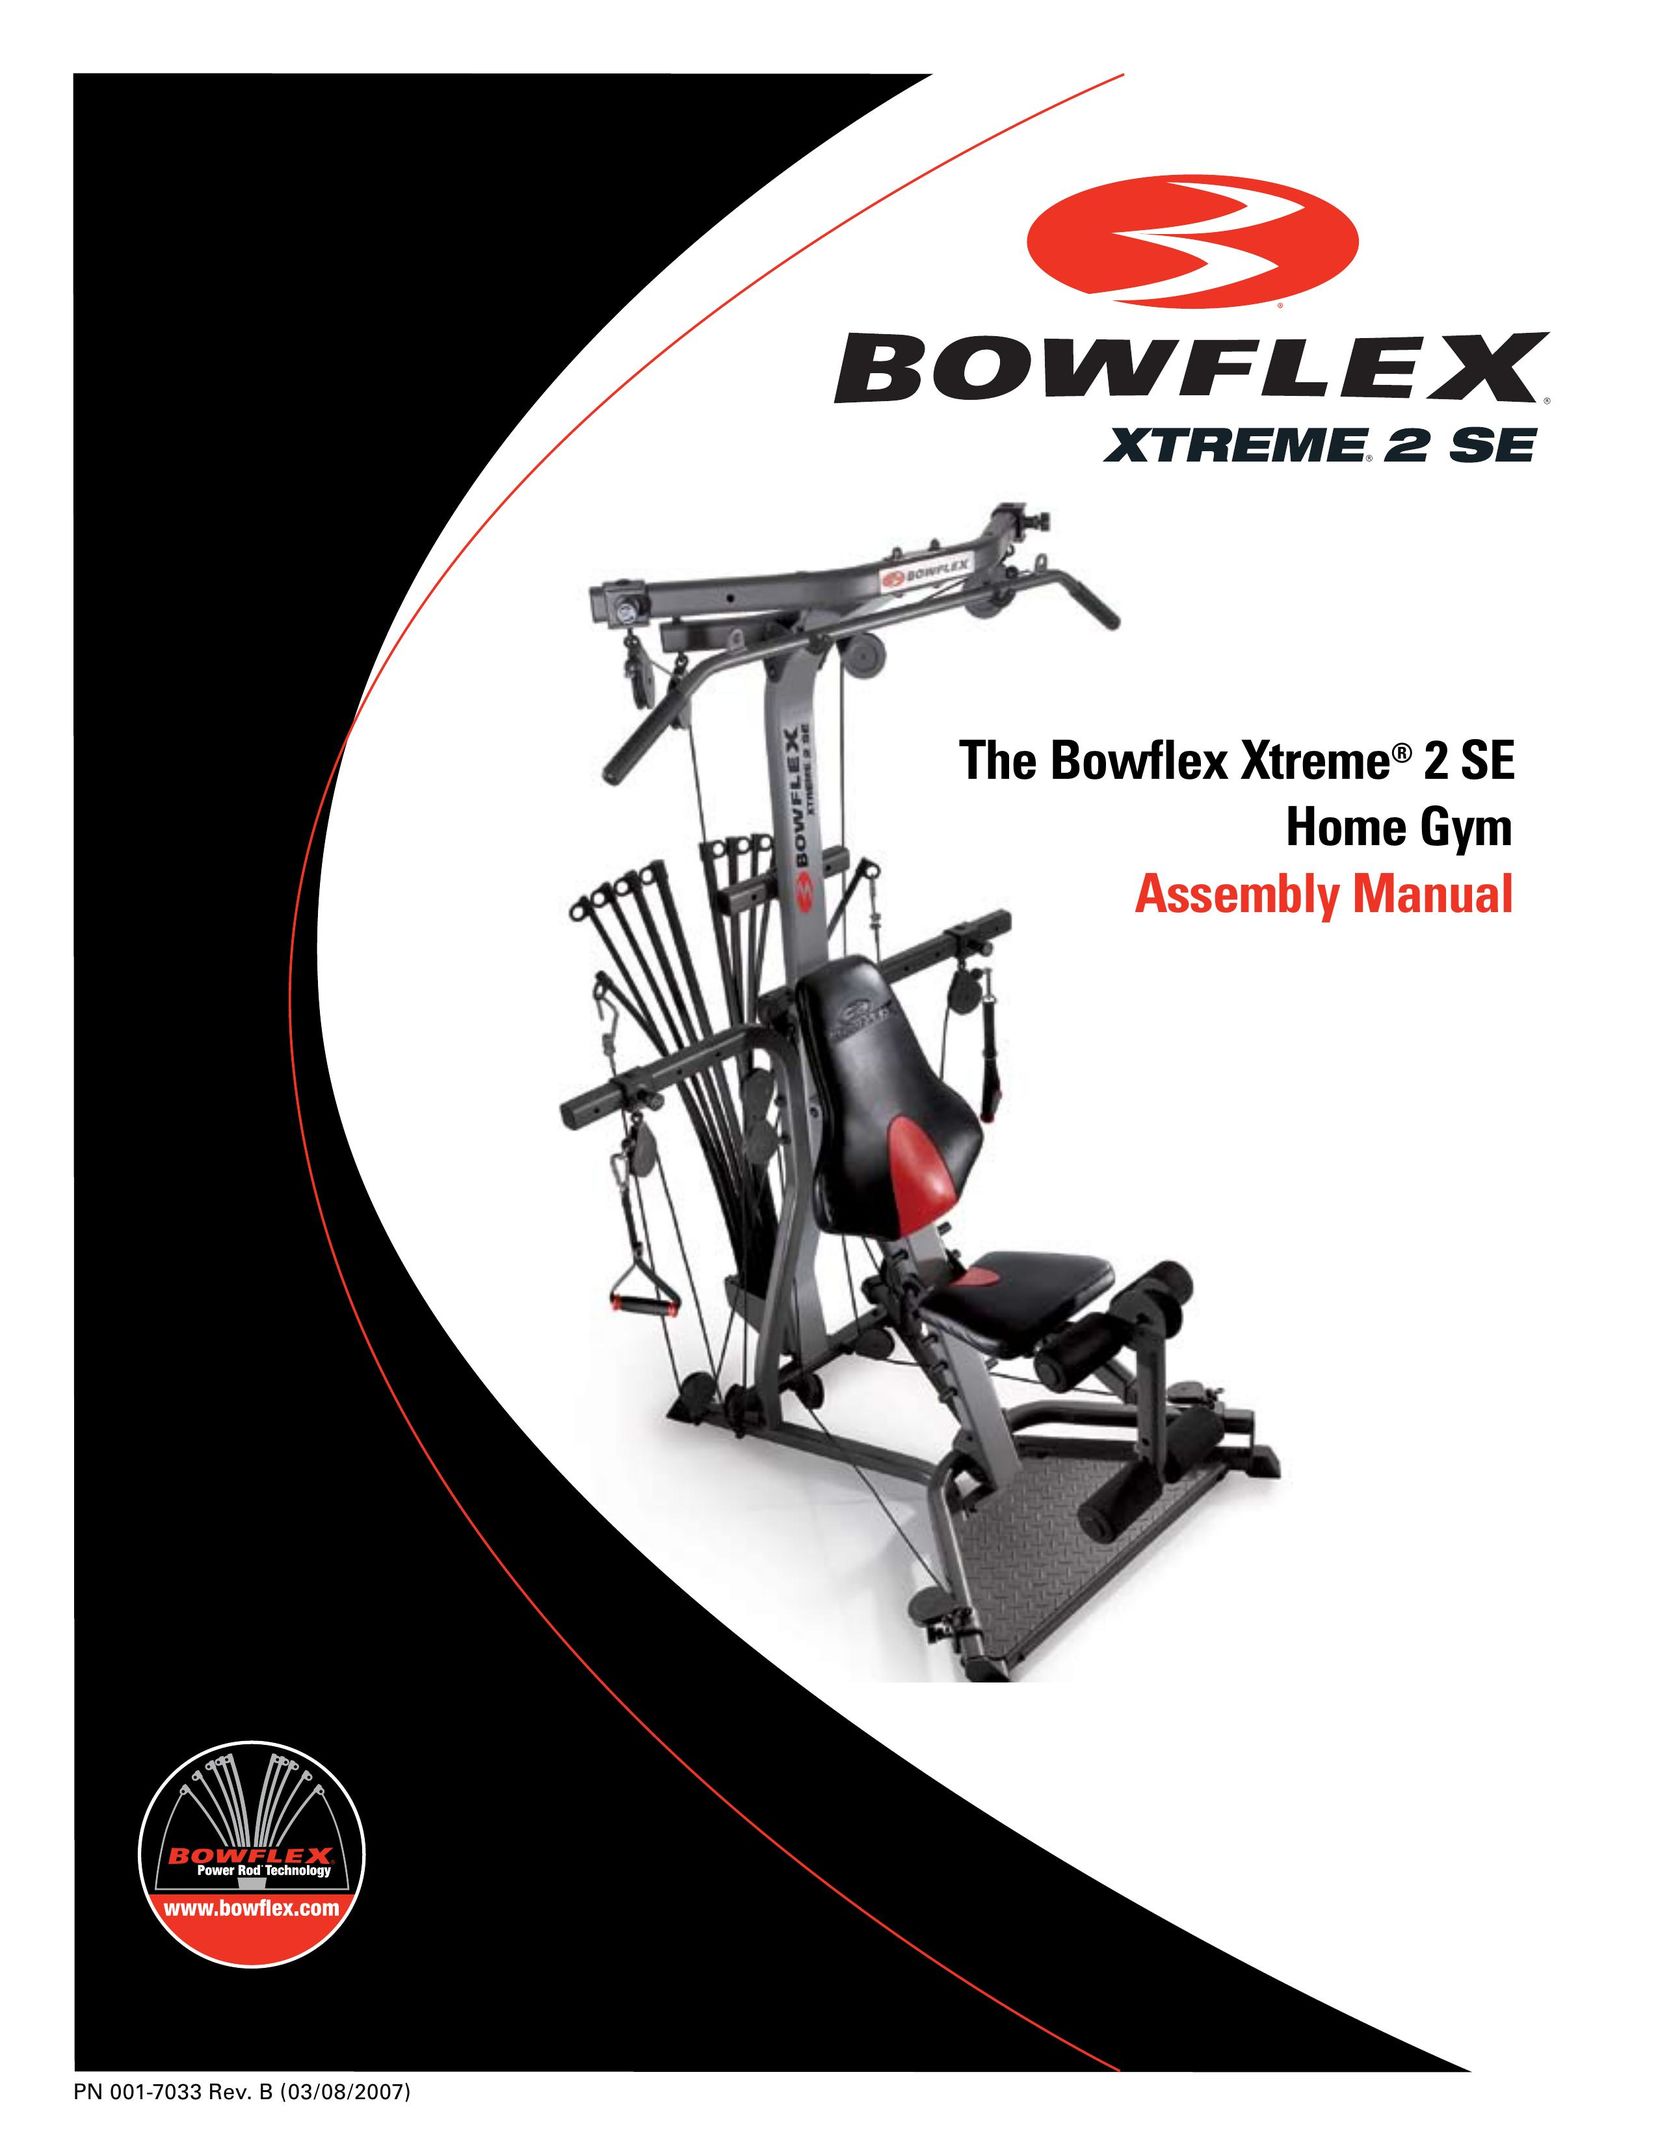 Bowflex Xtreme 2 SE Home Gym User Manual